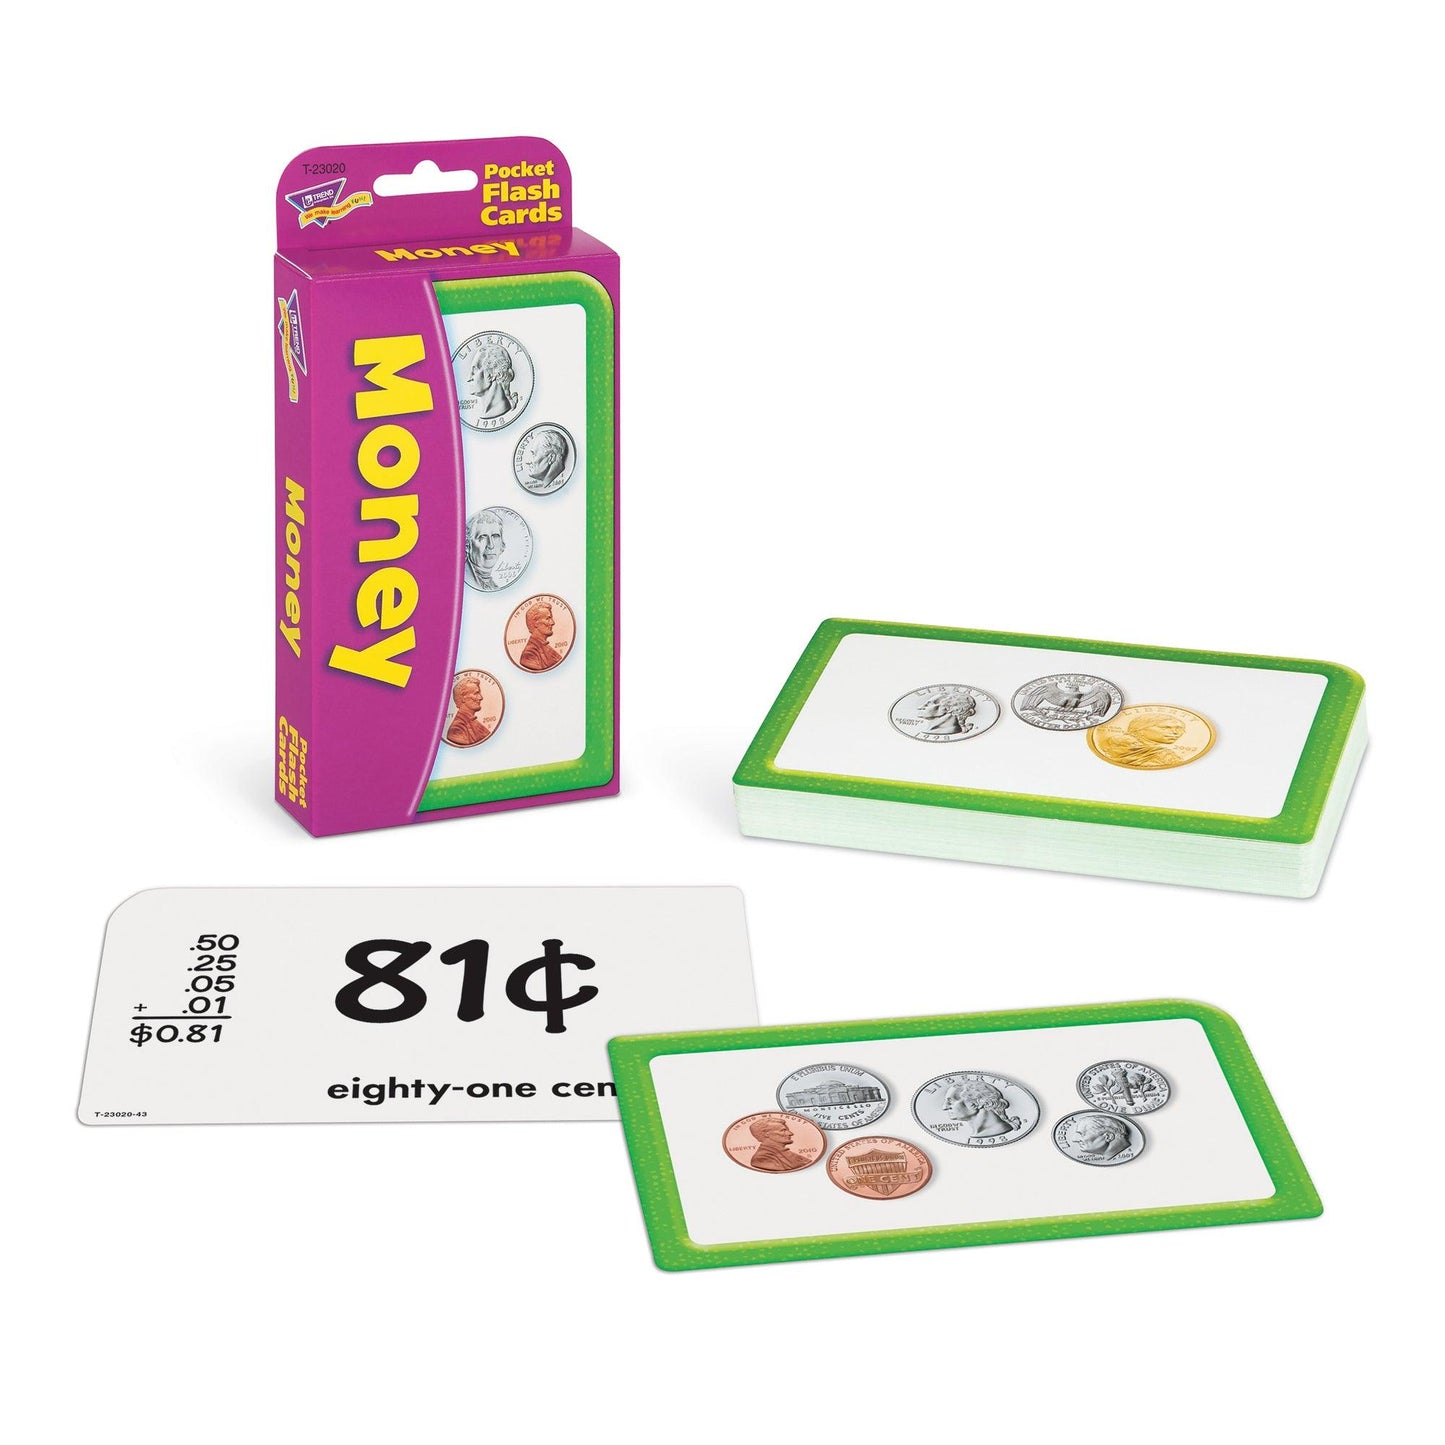 Money Pocket Flash Cards, 6 Packs - Loomini